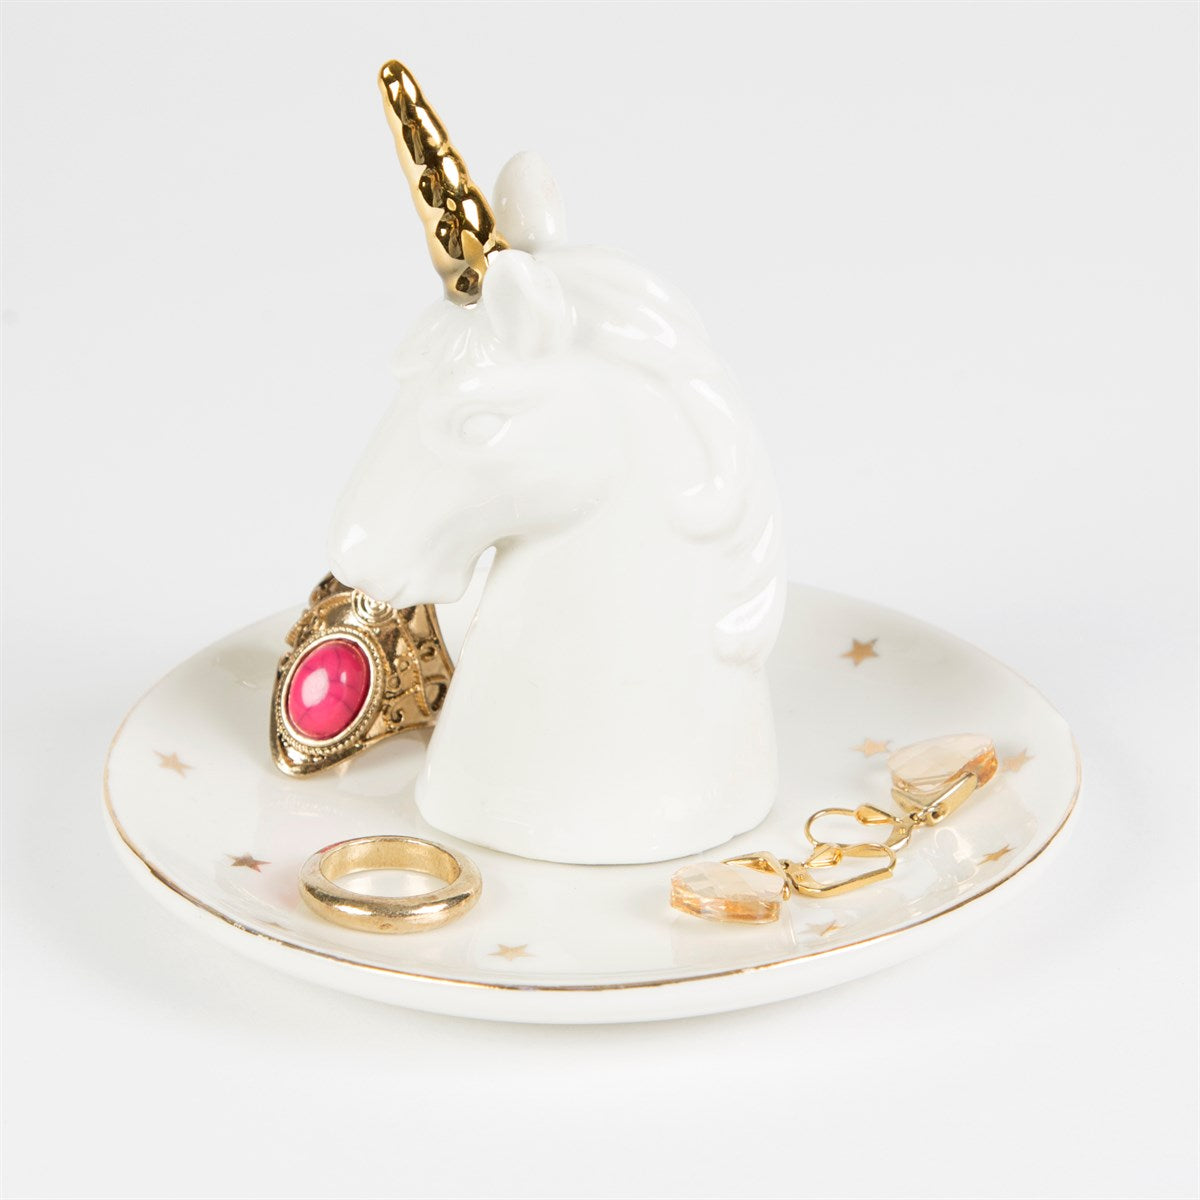 Gorgeous white unicorn head ceramic ring dish / trinket dish on a white star bowl.